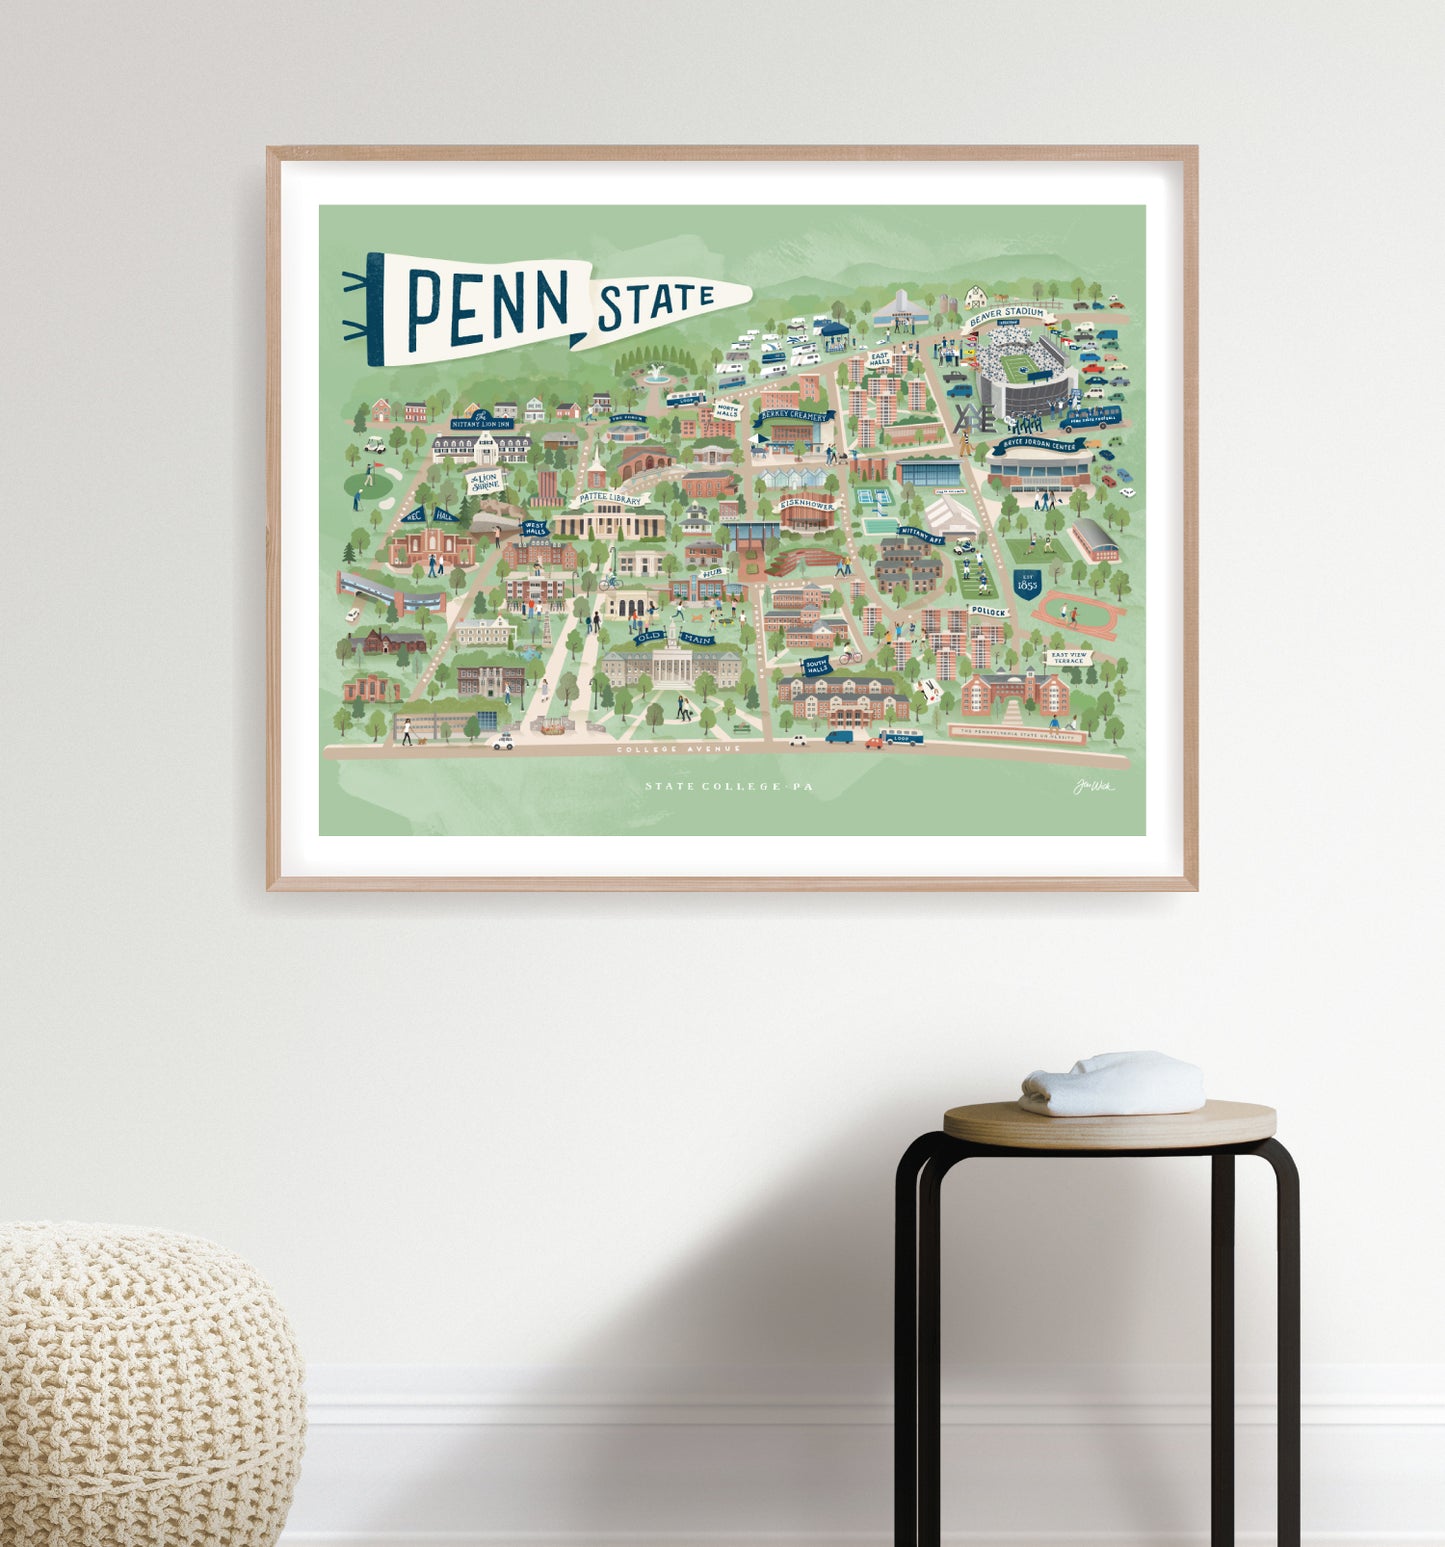 Penn State 18x24 poster